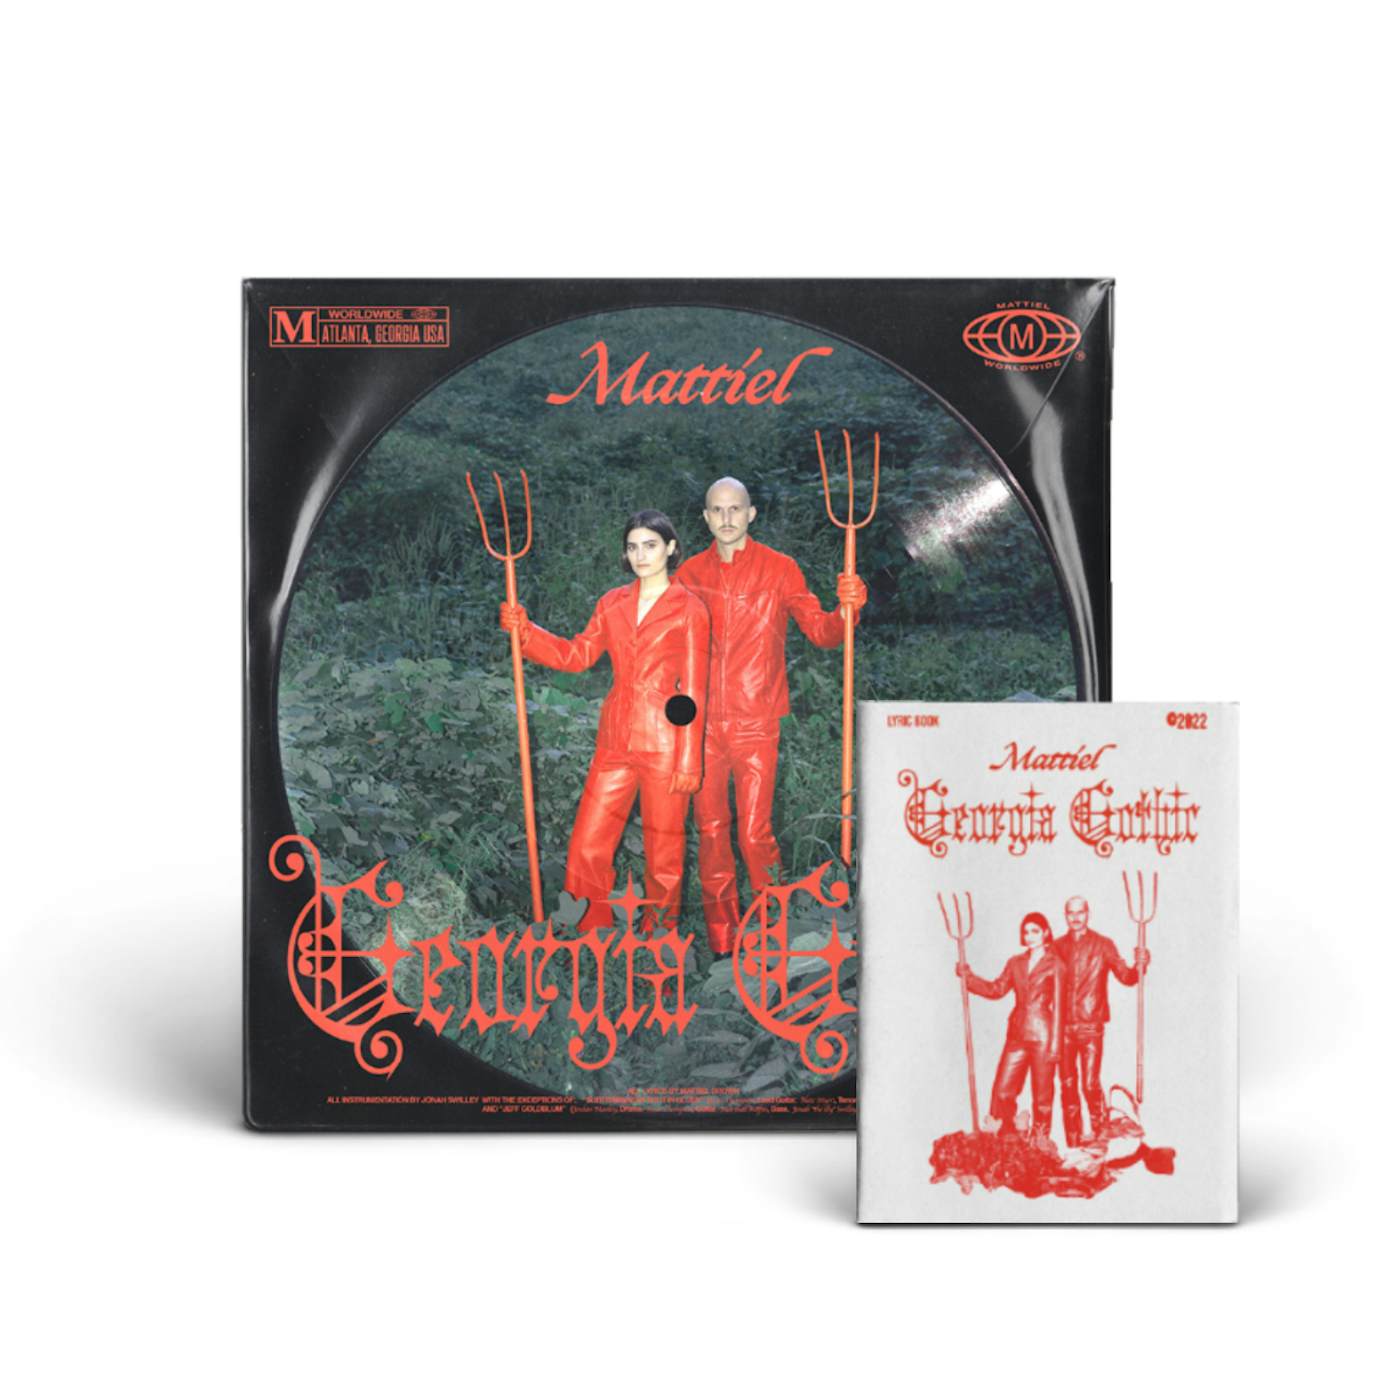 Mattiel – Georgia Gothic (Limited Edition Picture Disc)